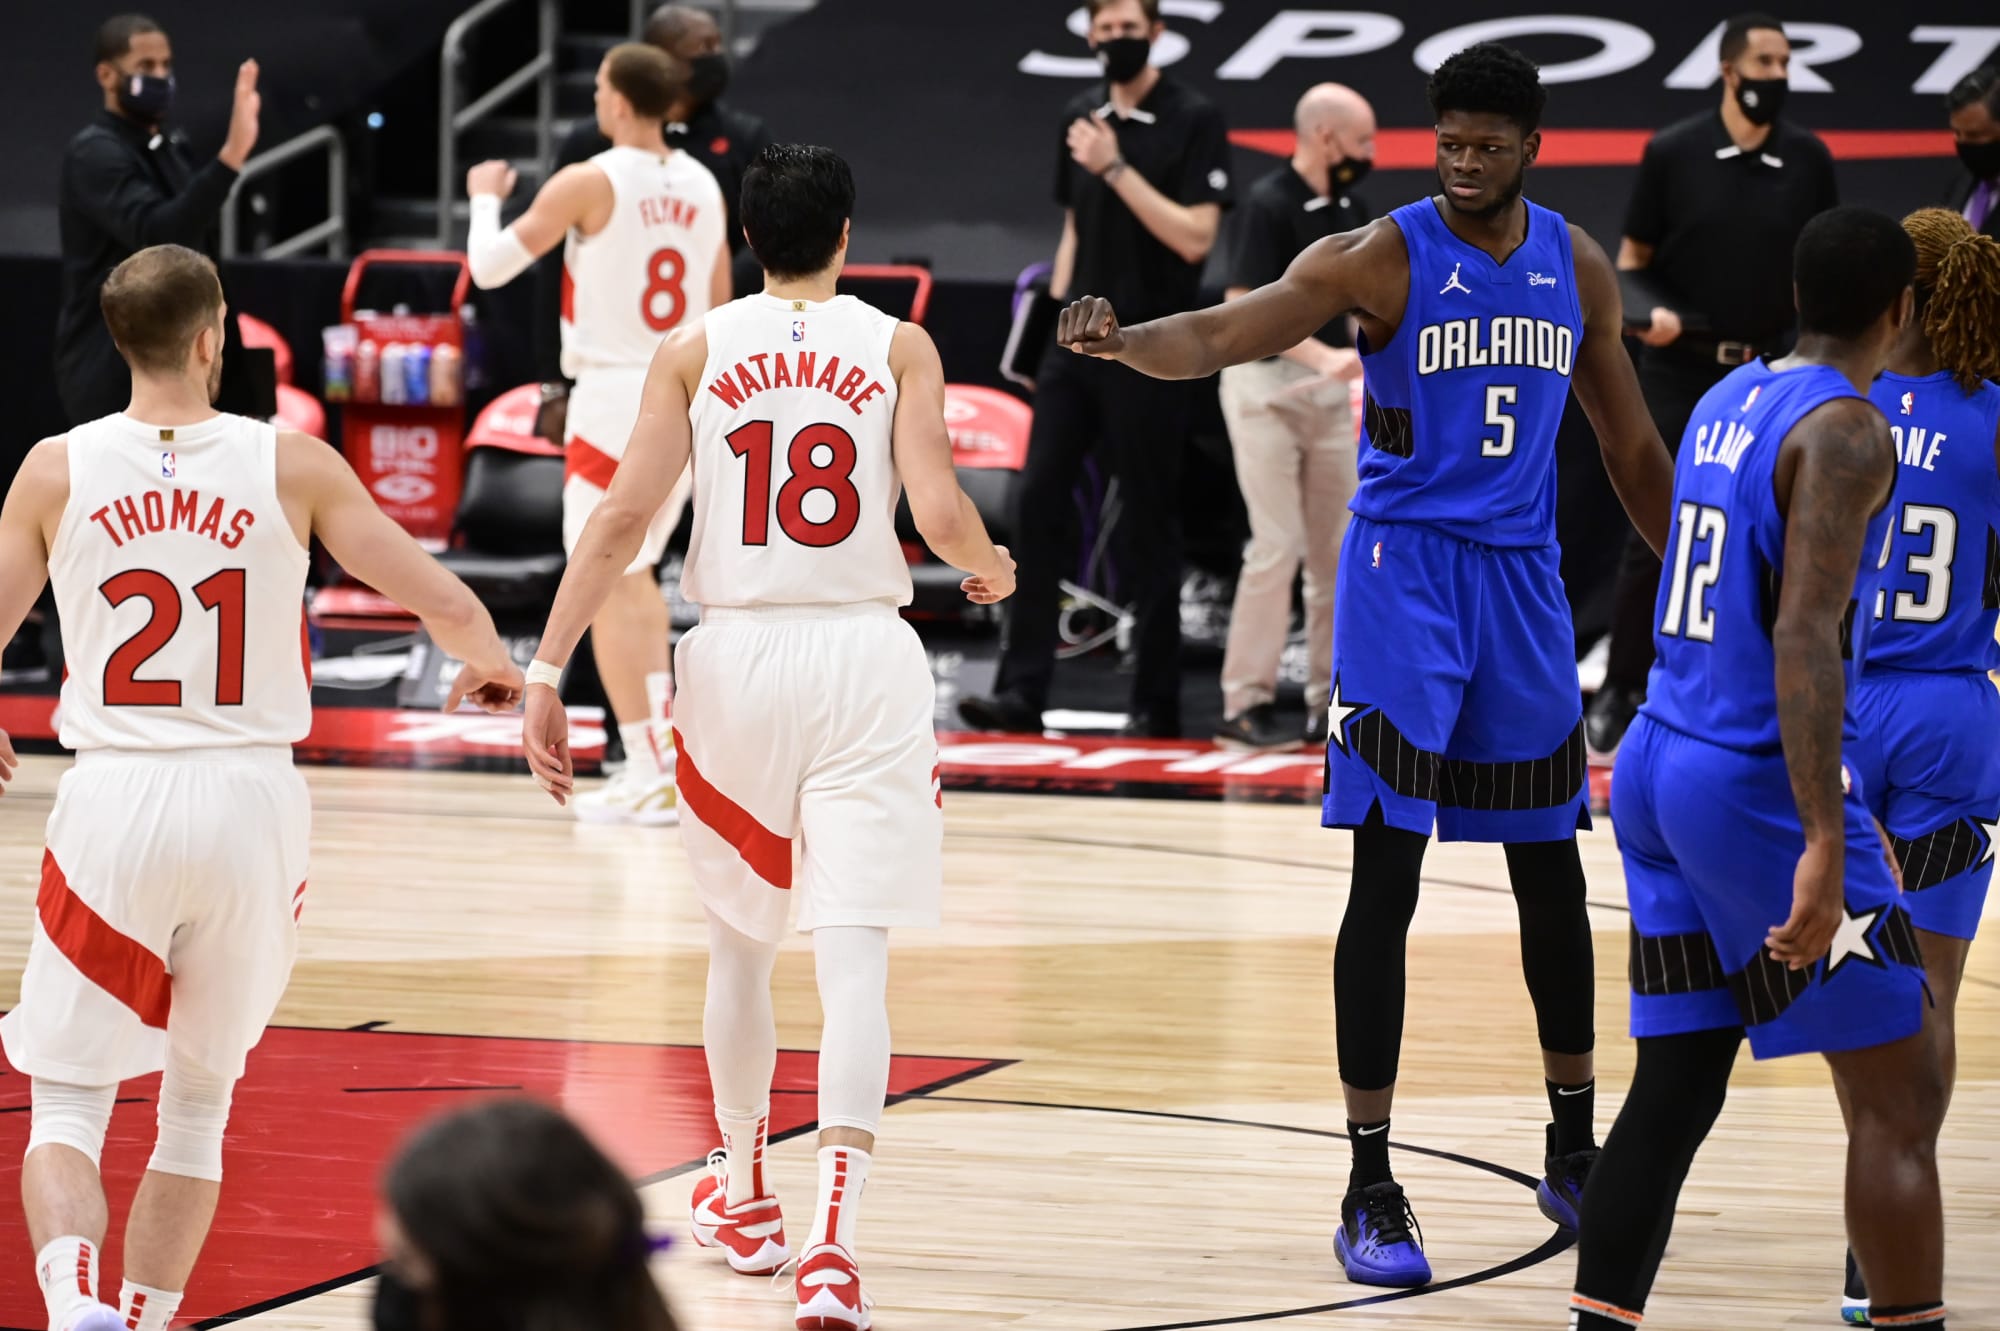 Should the Toronto Raptors make a move for Orlando’s Mo Bamba?